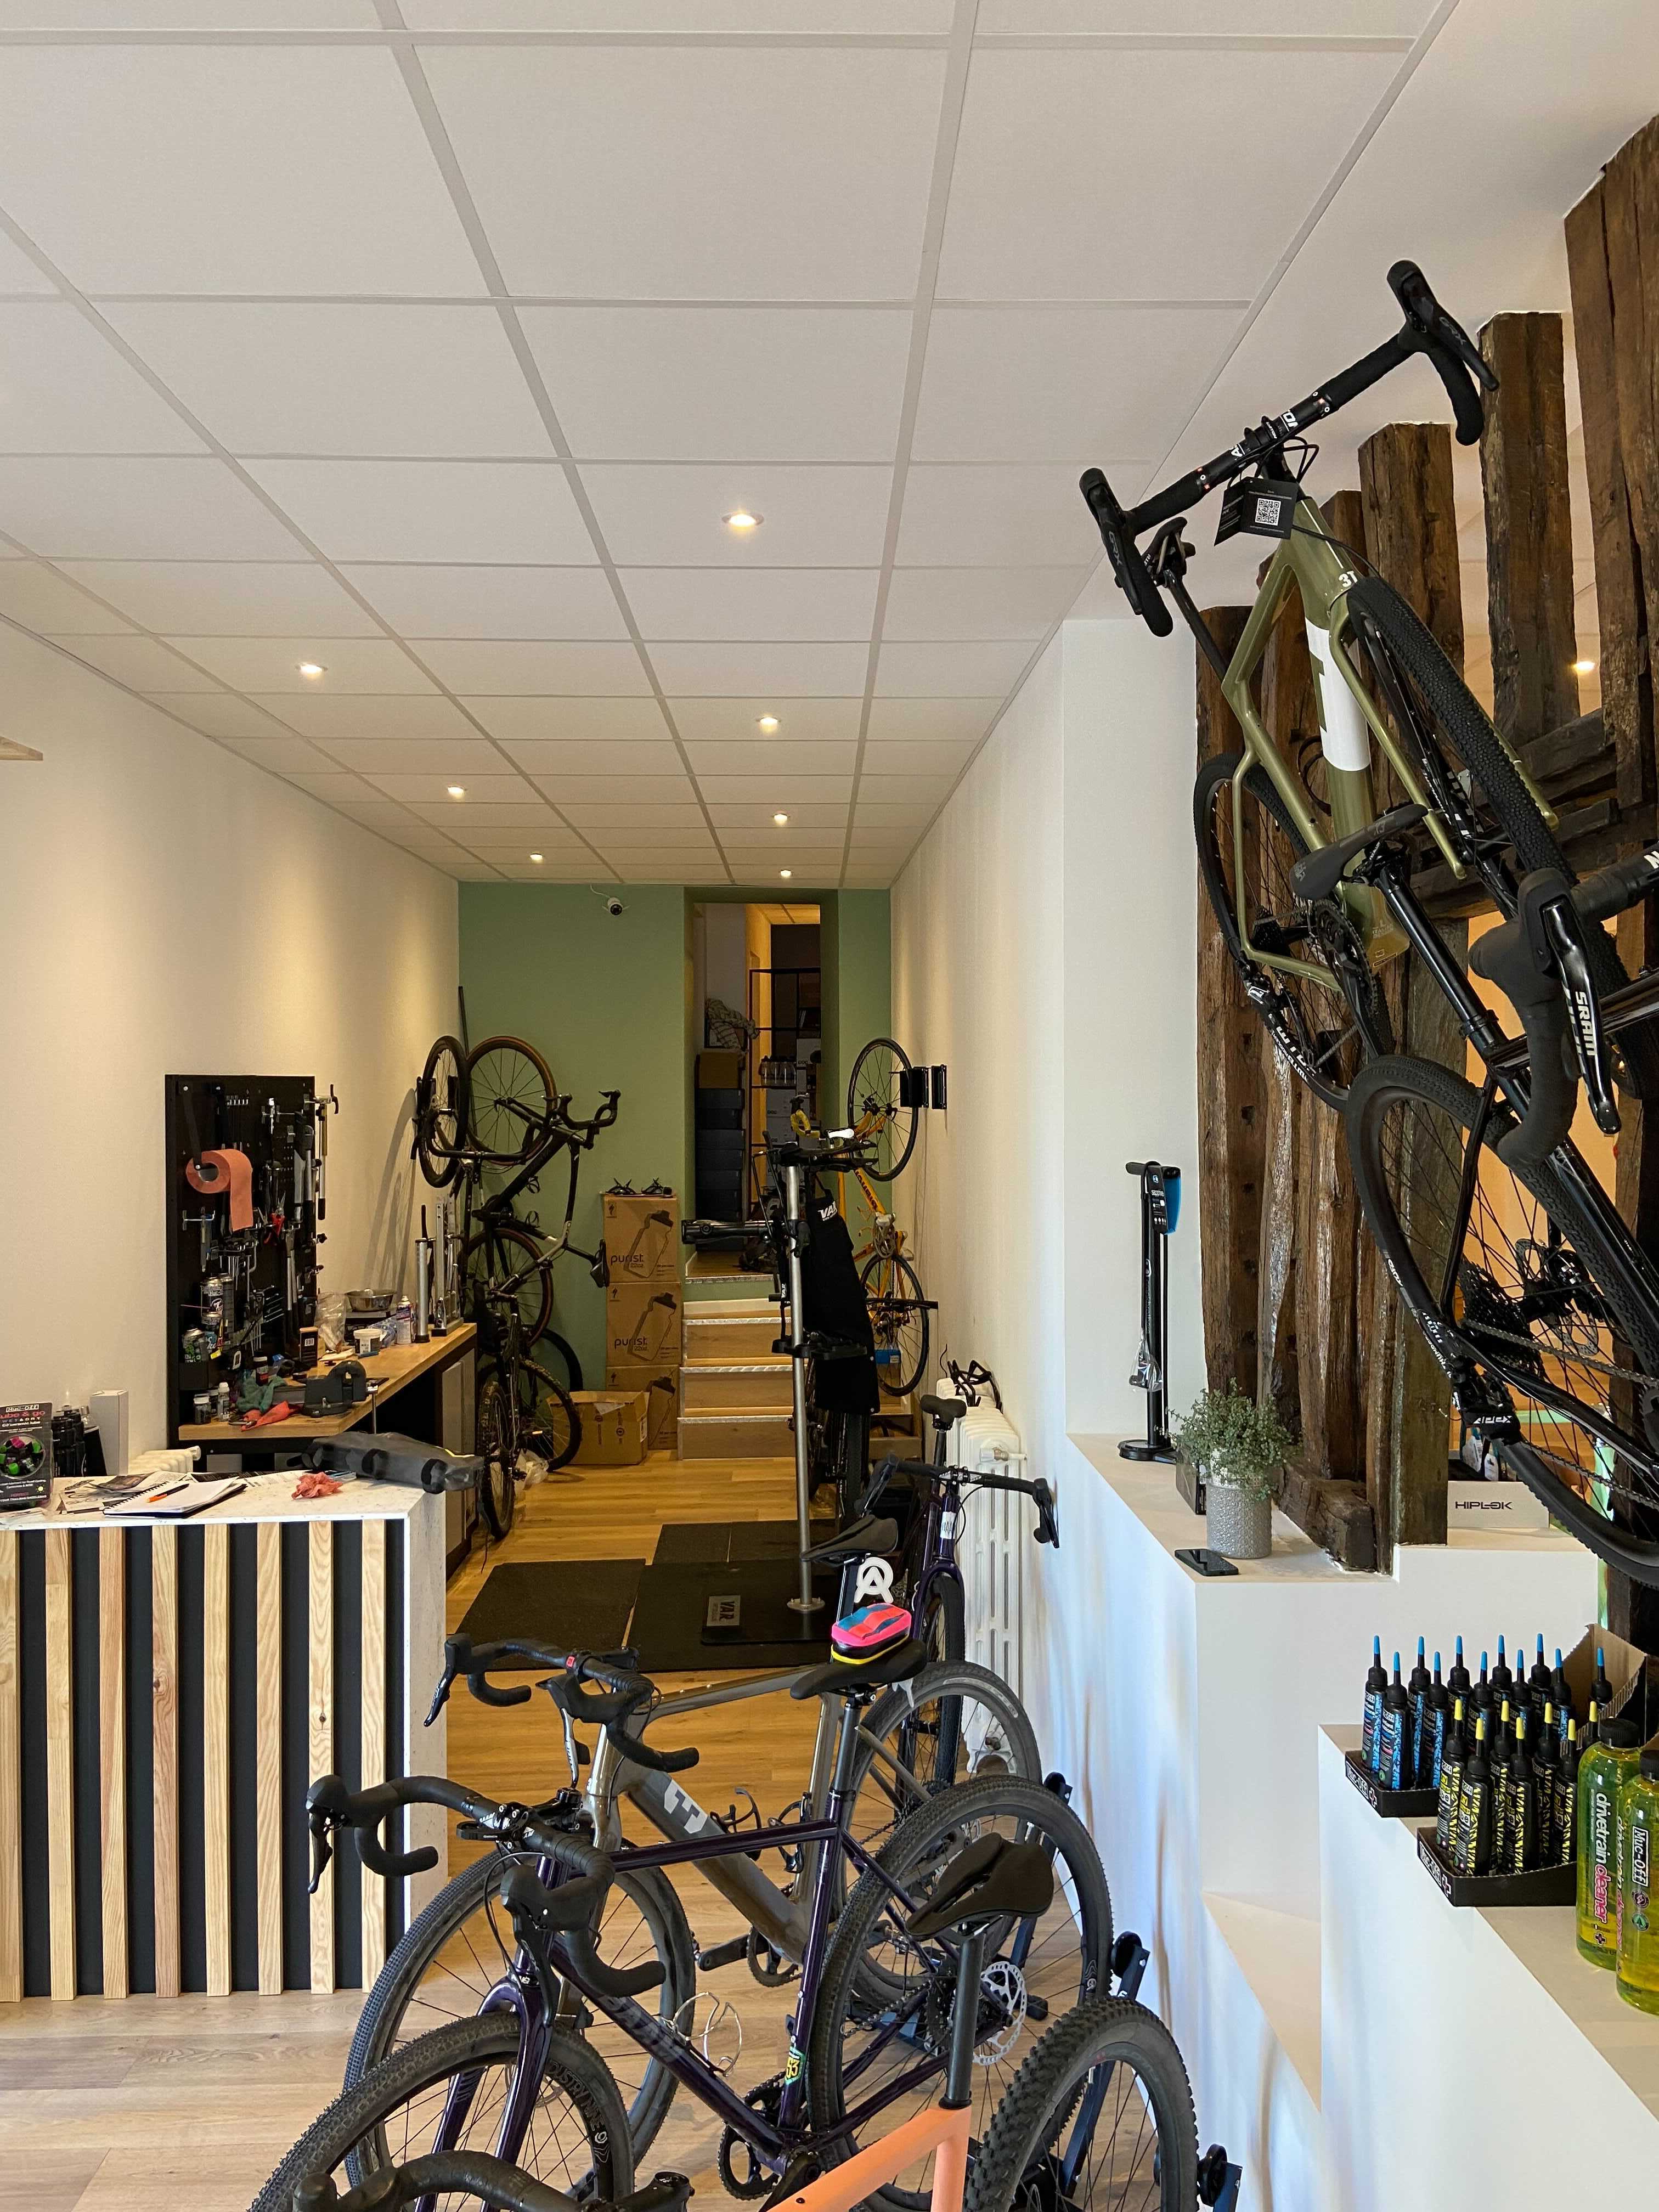 Café-magasin de vélo - La Cyclisterie null France null null null null